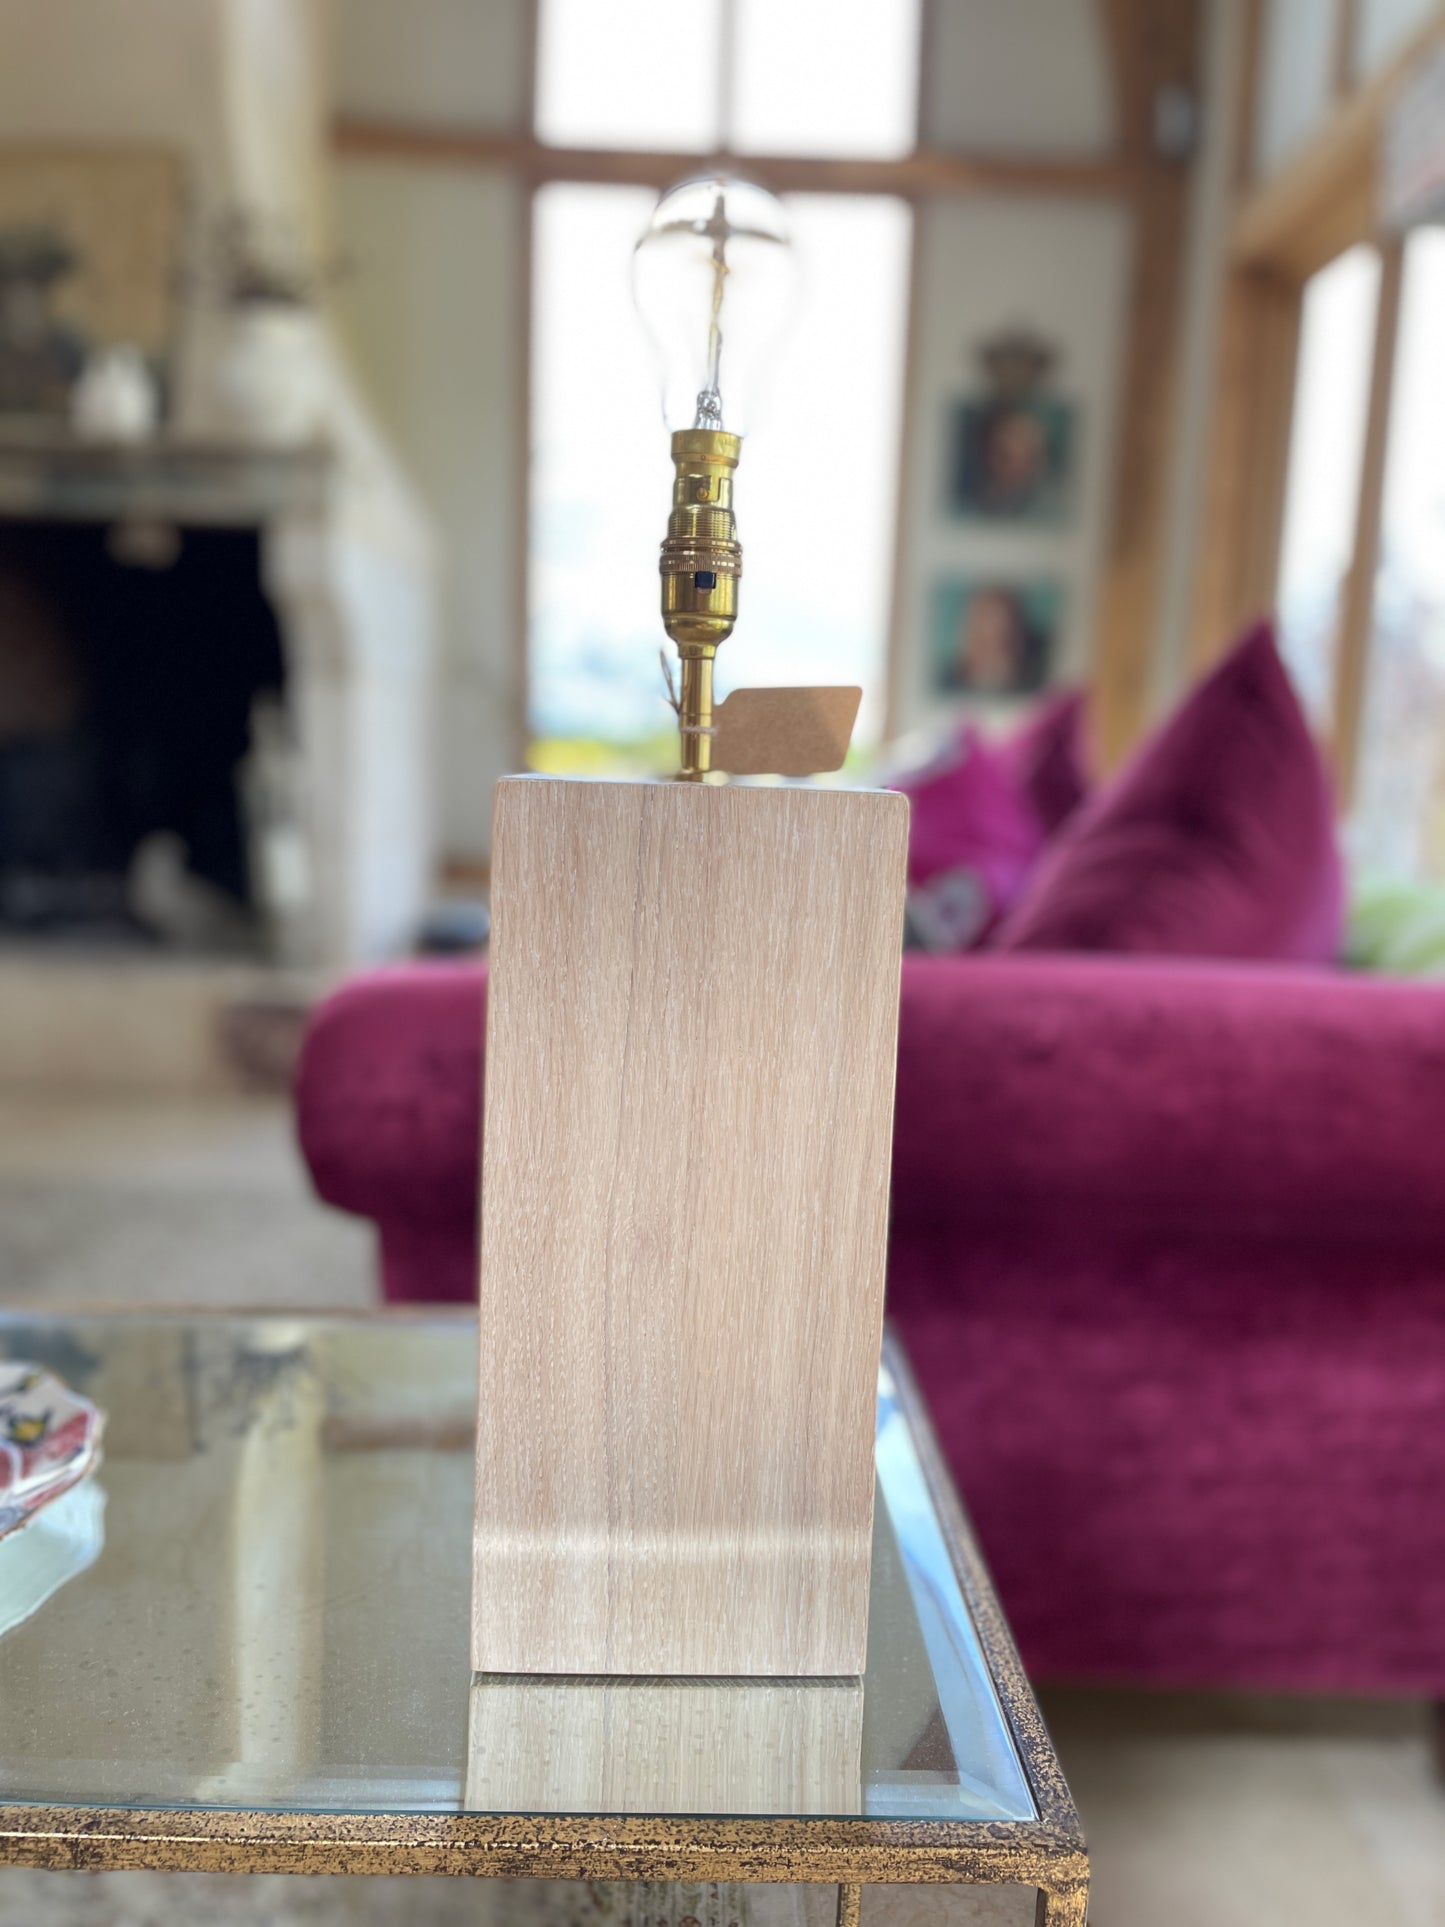 Solid oak lamp base 30cm